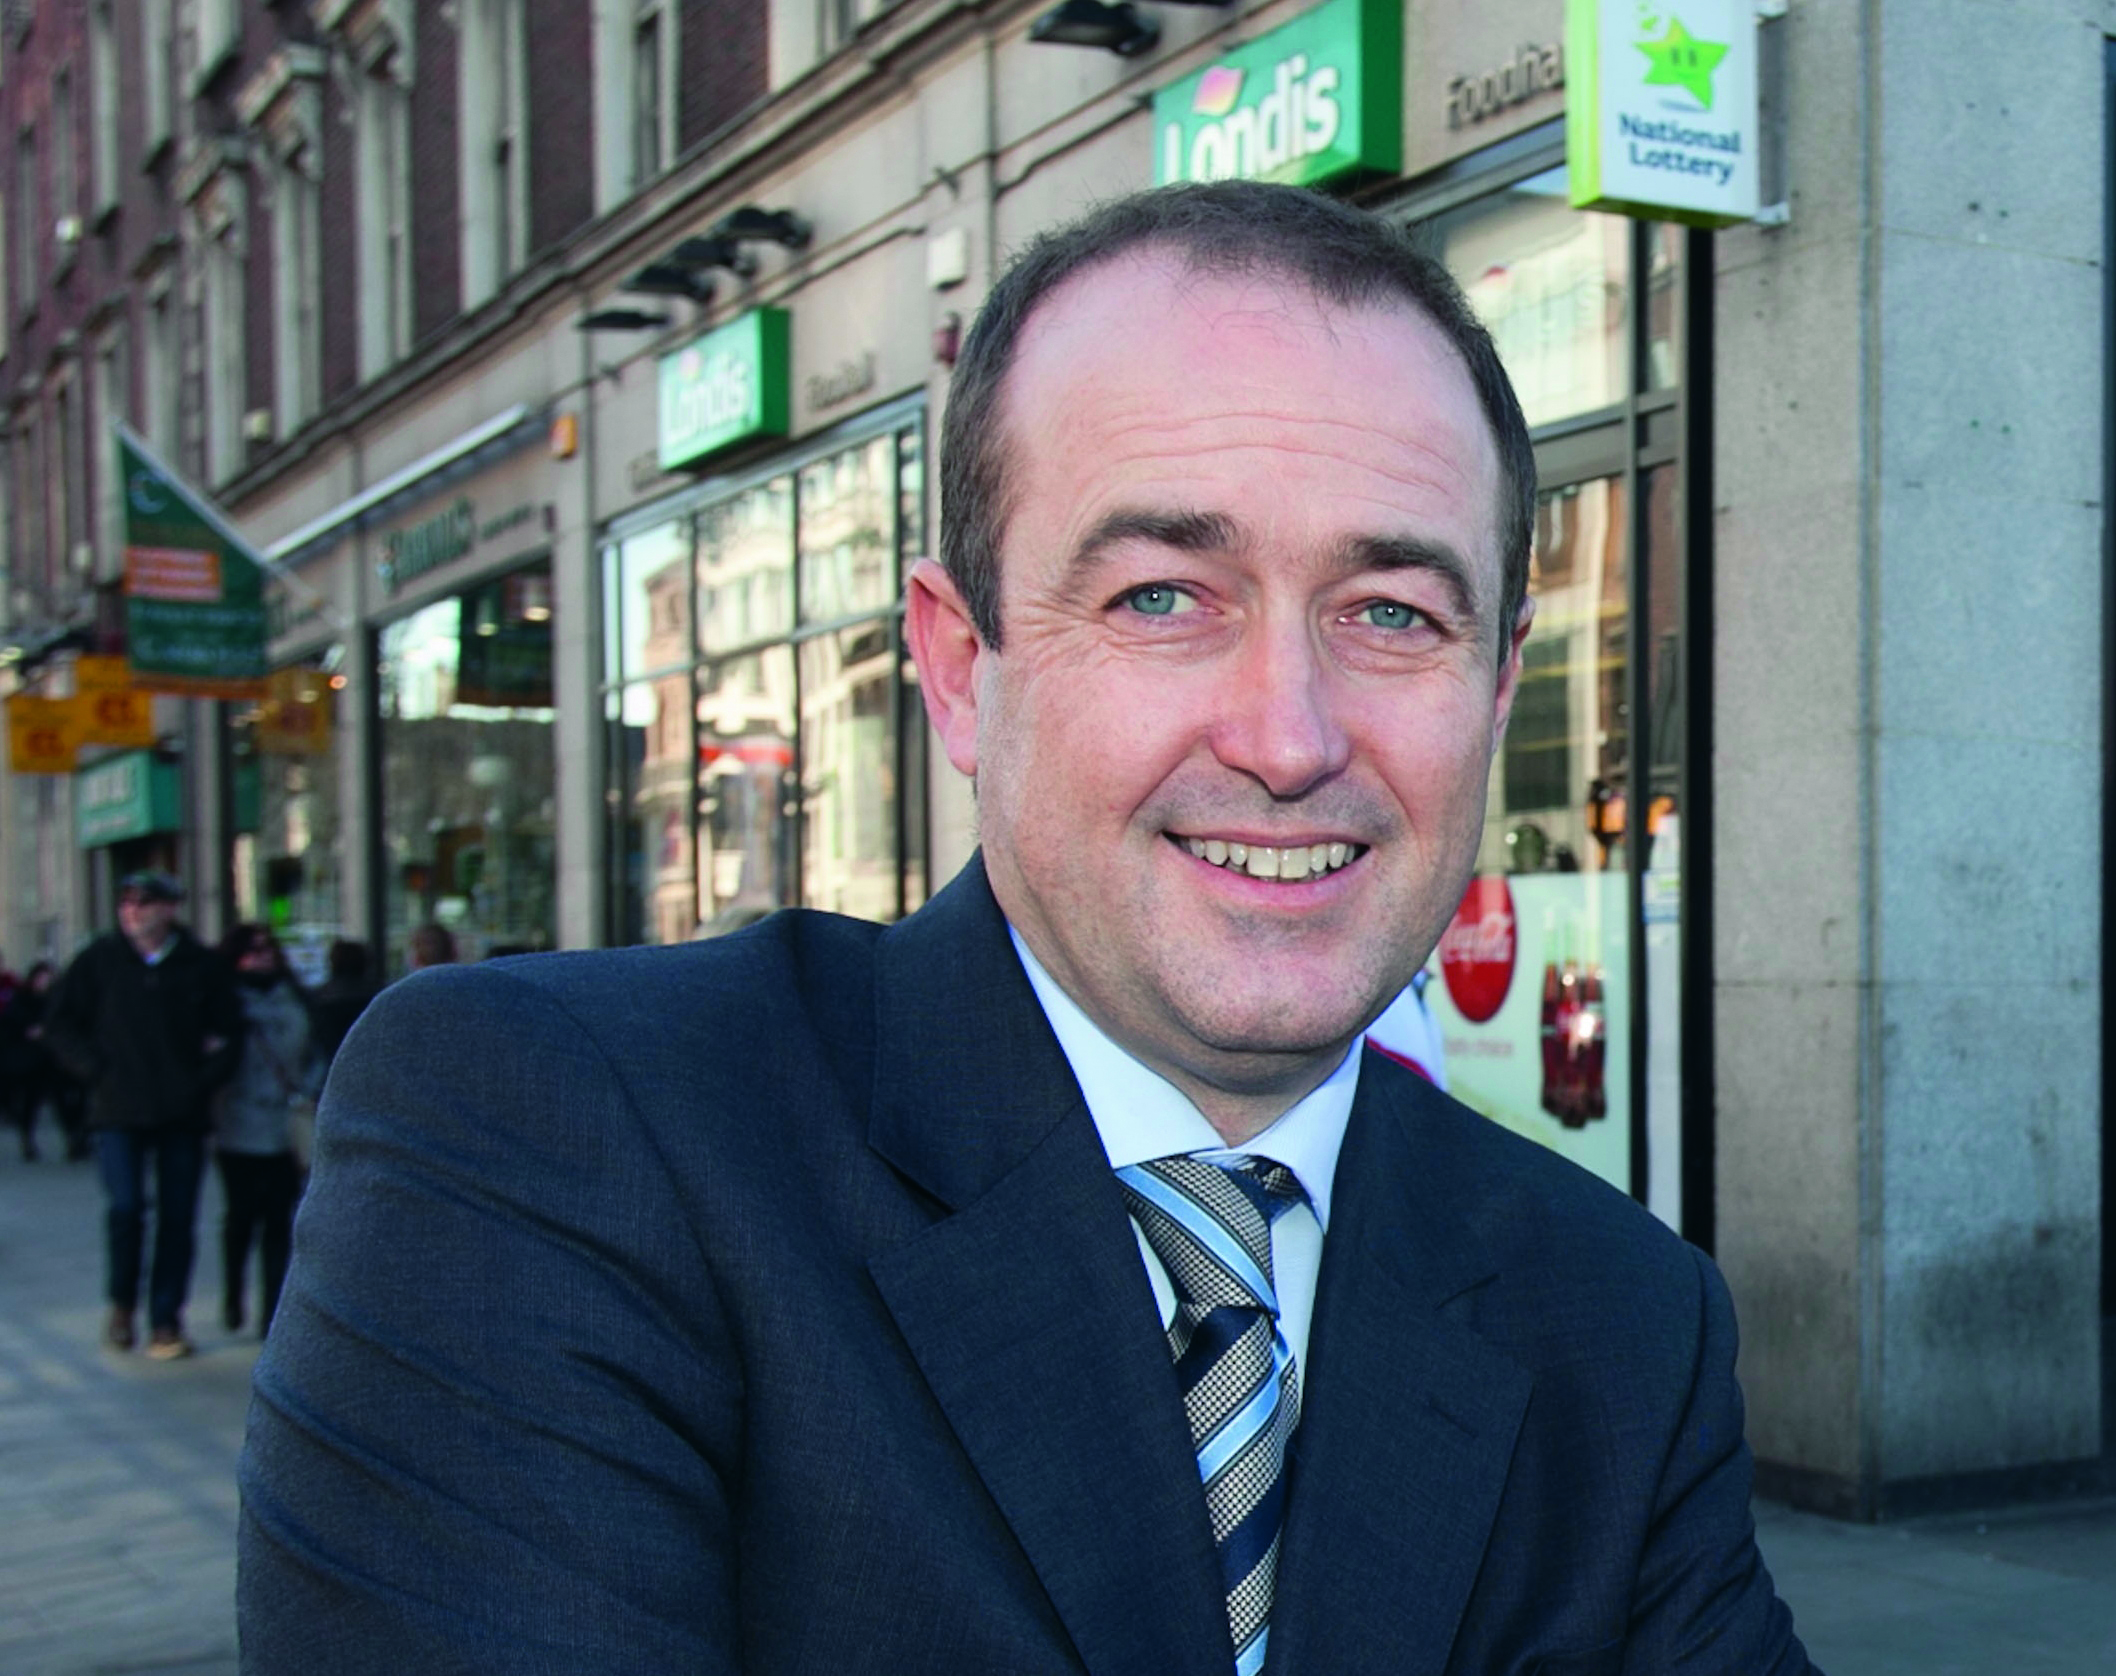 Stephen O'Riordan, Londis CEO